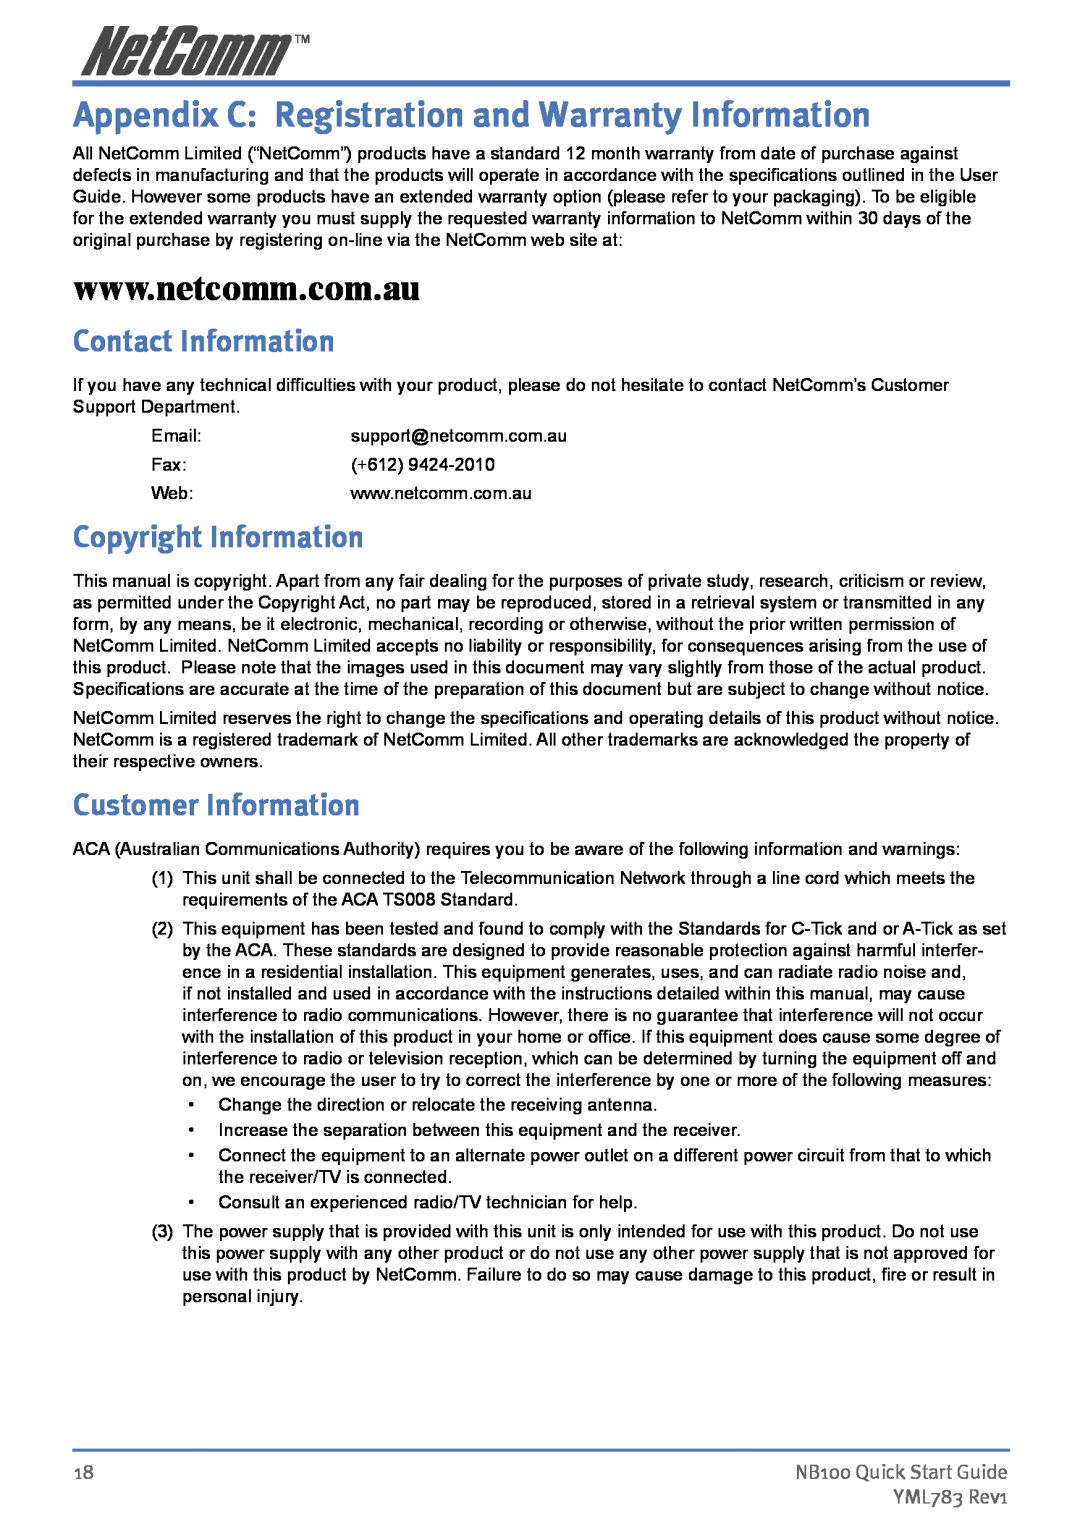 NetComm NB100 Appendix C Registration and Warranty Information, Contact Information, Copyright Information, YML783 Rev1 